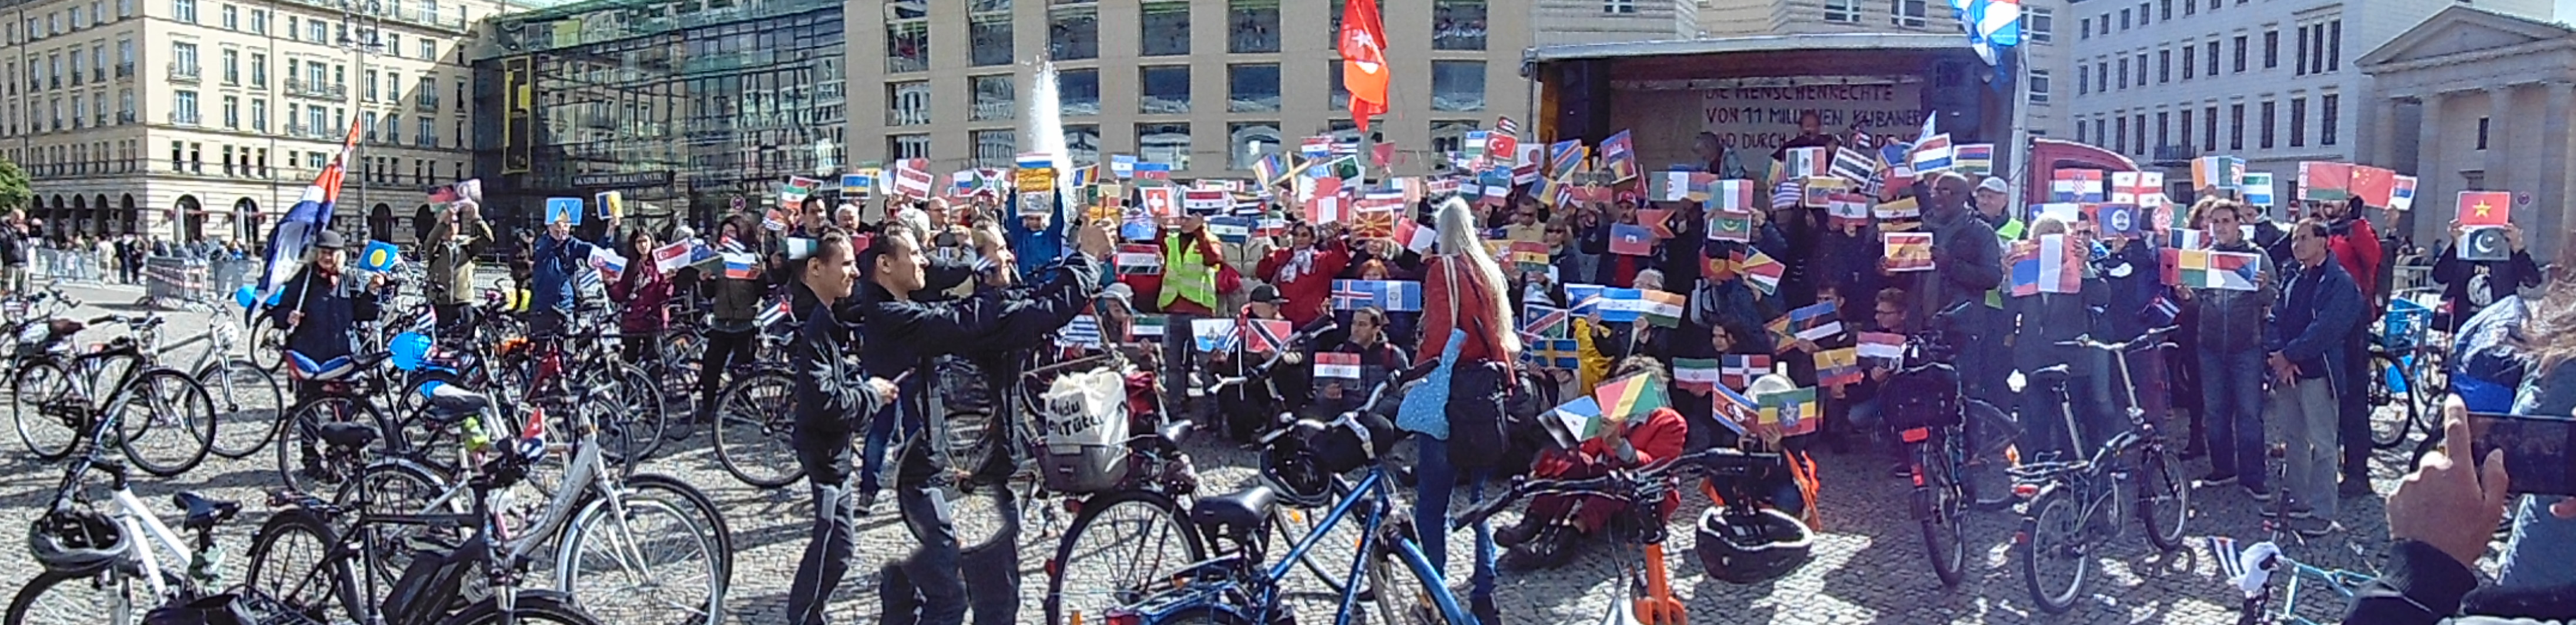 Fahrrad-Demo gegen die US-Blockade